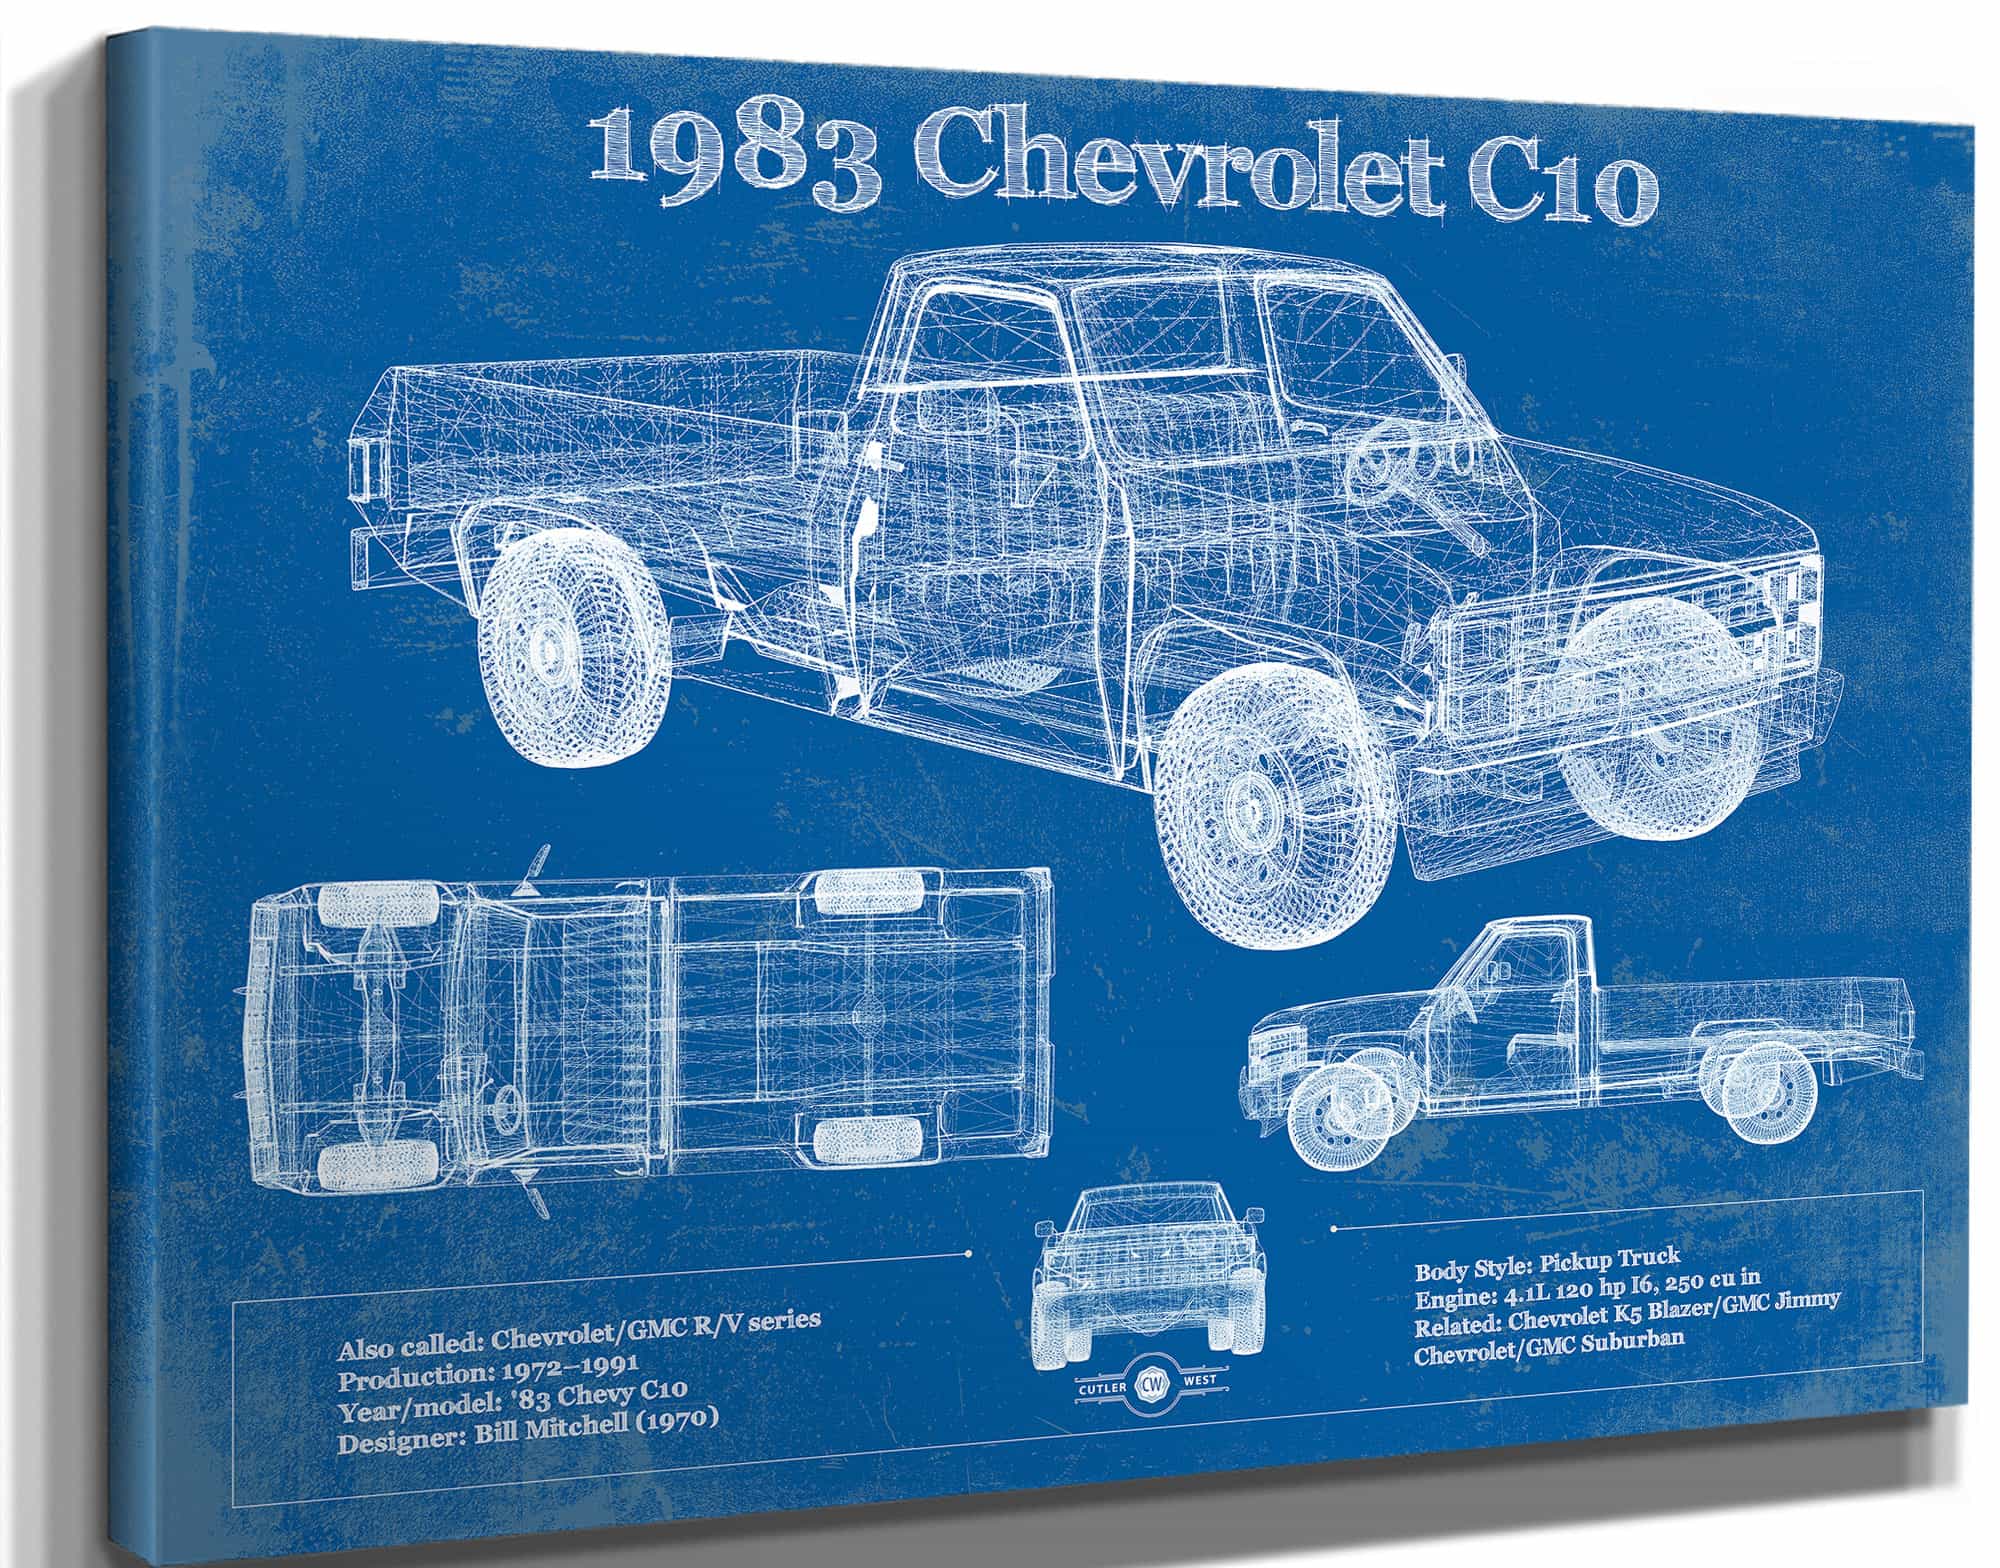 1983 Chevrolet C10 - Third generation (Rounded Line) - Vintage Blueprint Auto Print